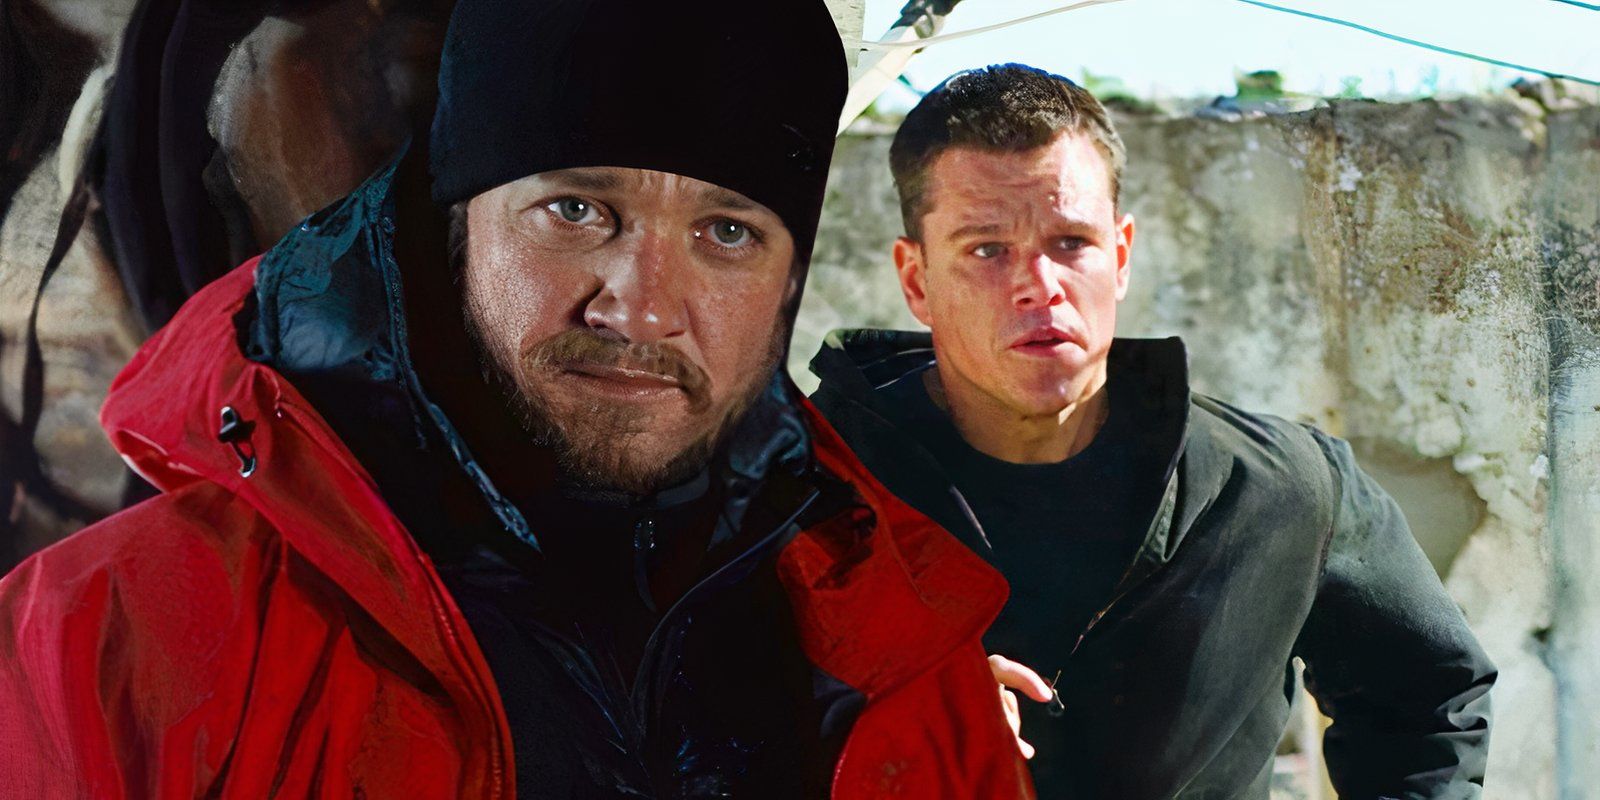 Jeremy Renner as Aaron Cross juxtaposed with Matt Damon as Jason Bourne